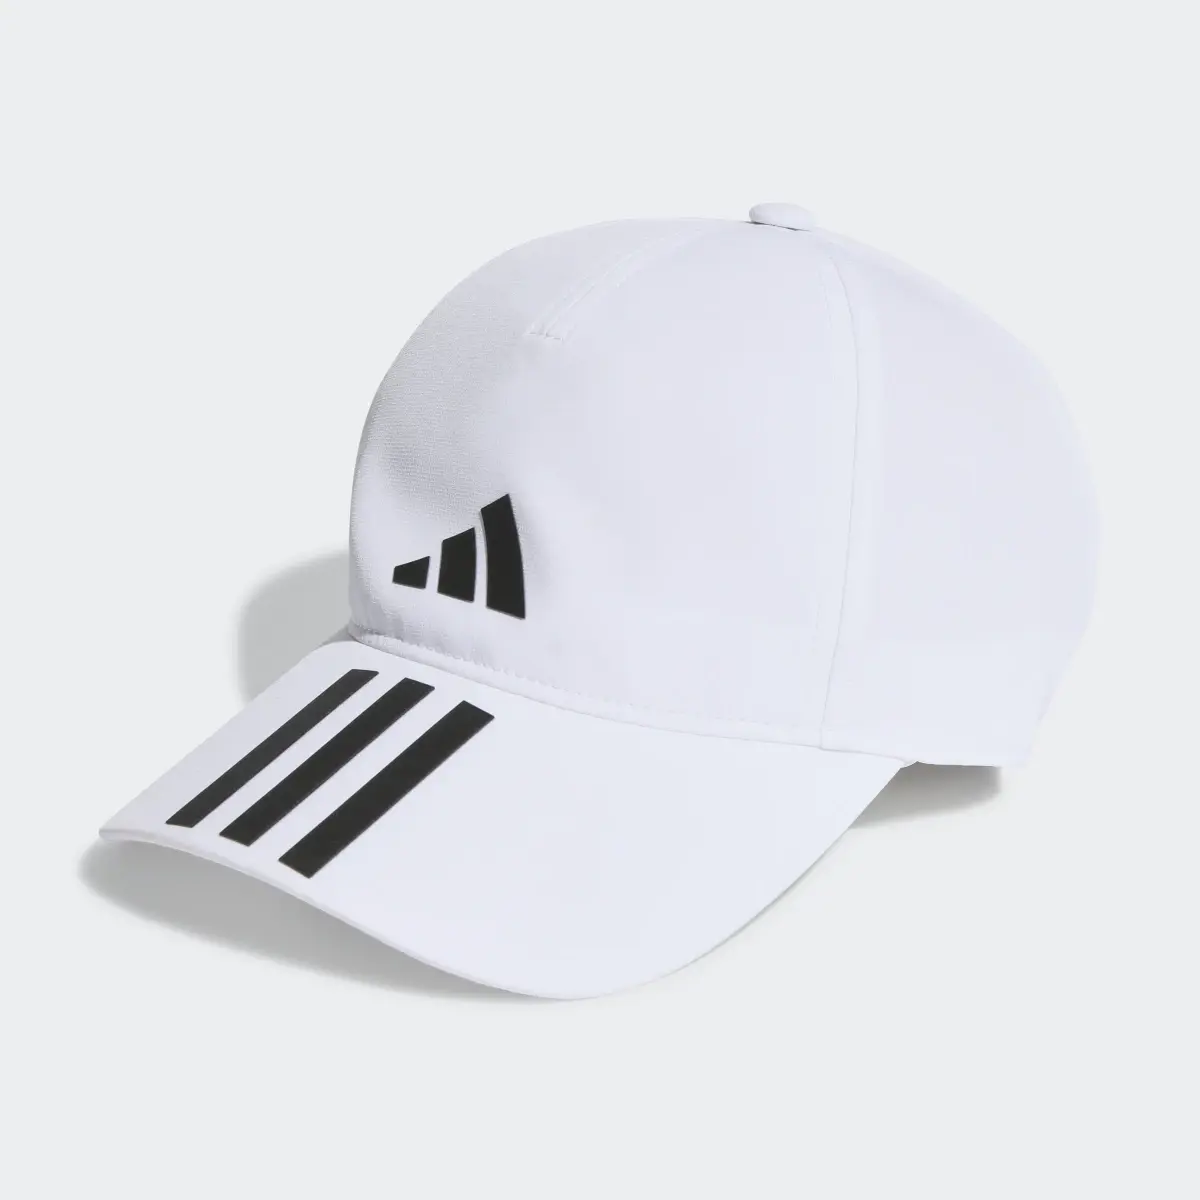 Adidas 3-Stripes AEROREADY Running Training Baseball Cap. 2